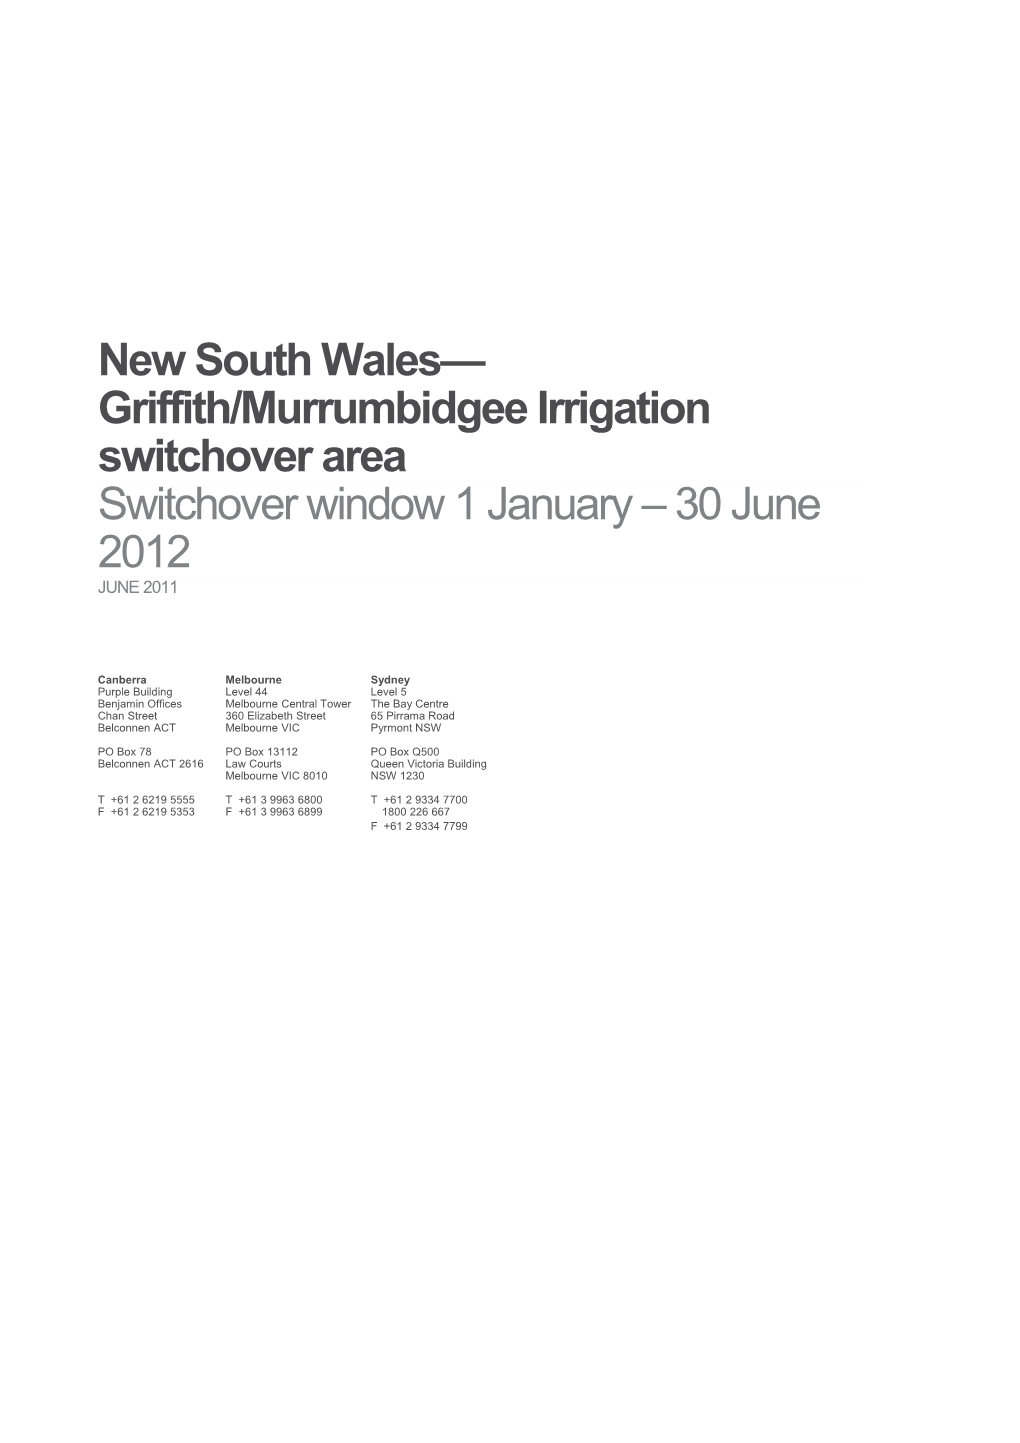 NSW Griffith/Murrumbidgee Irrigation Switchover Area